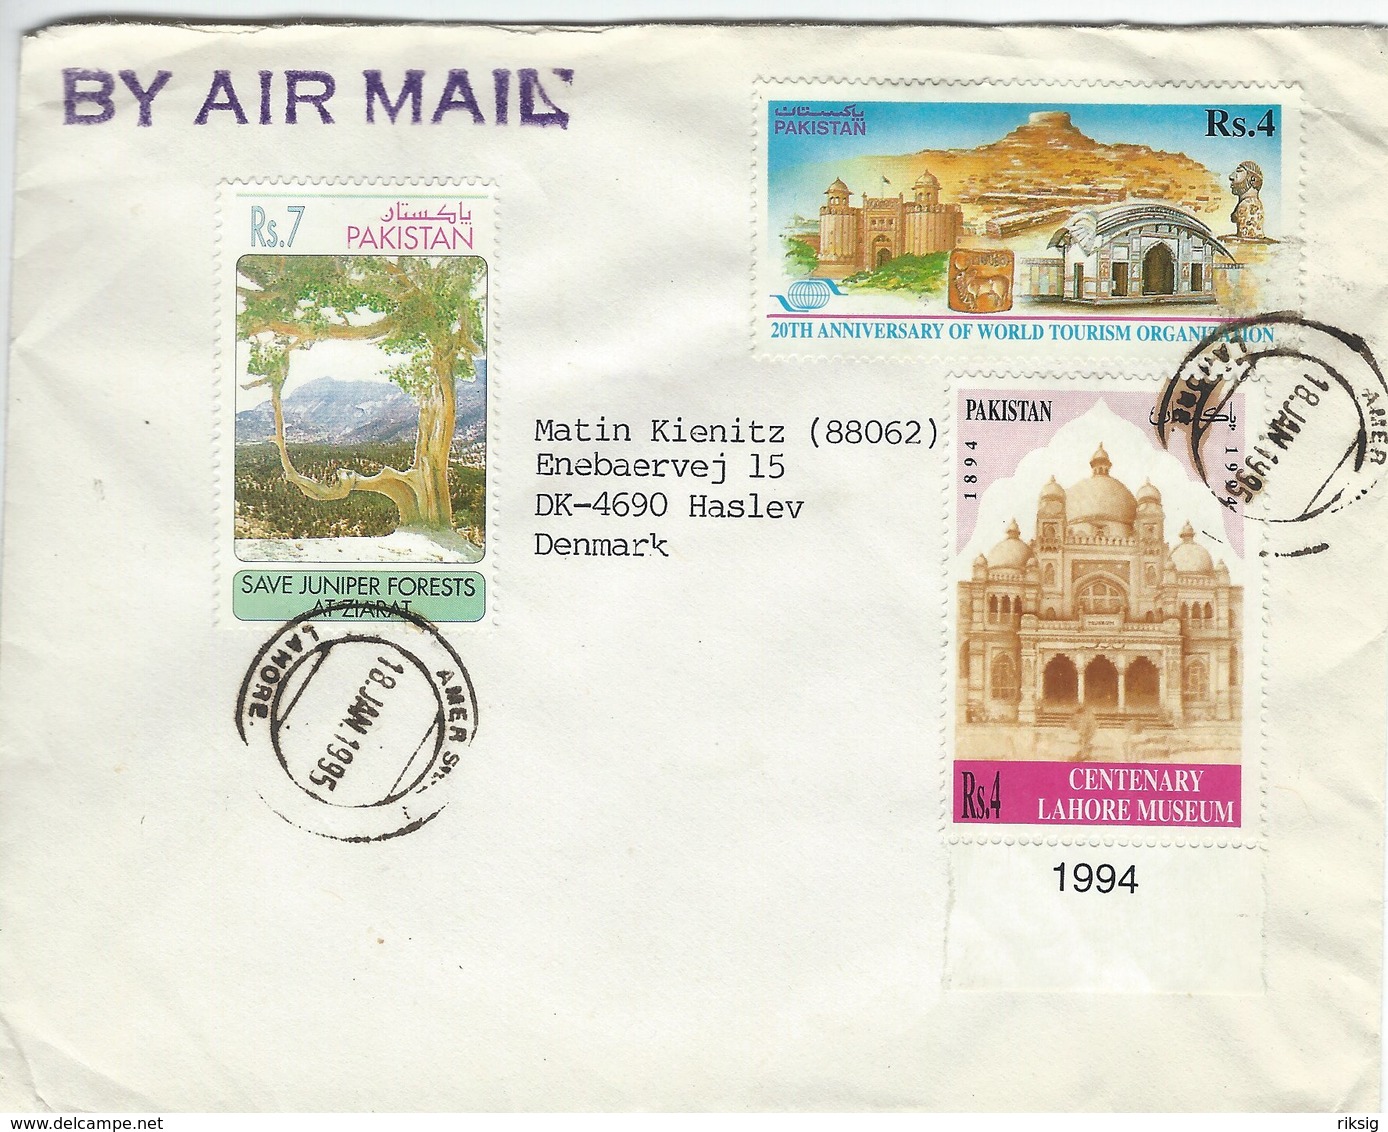 Pakistan - Airmail Cover Sent To Denmark 1995  H-1554 - Pakistan